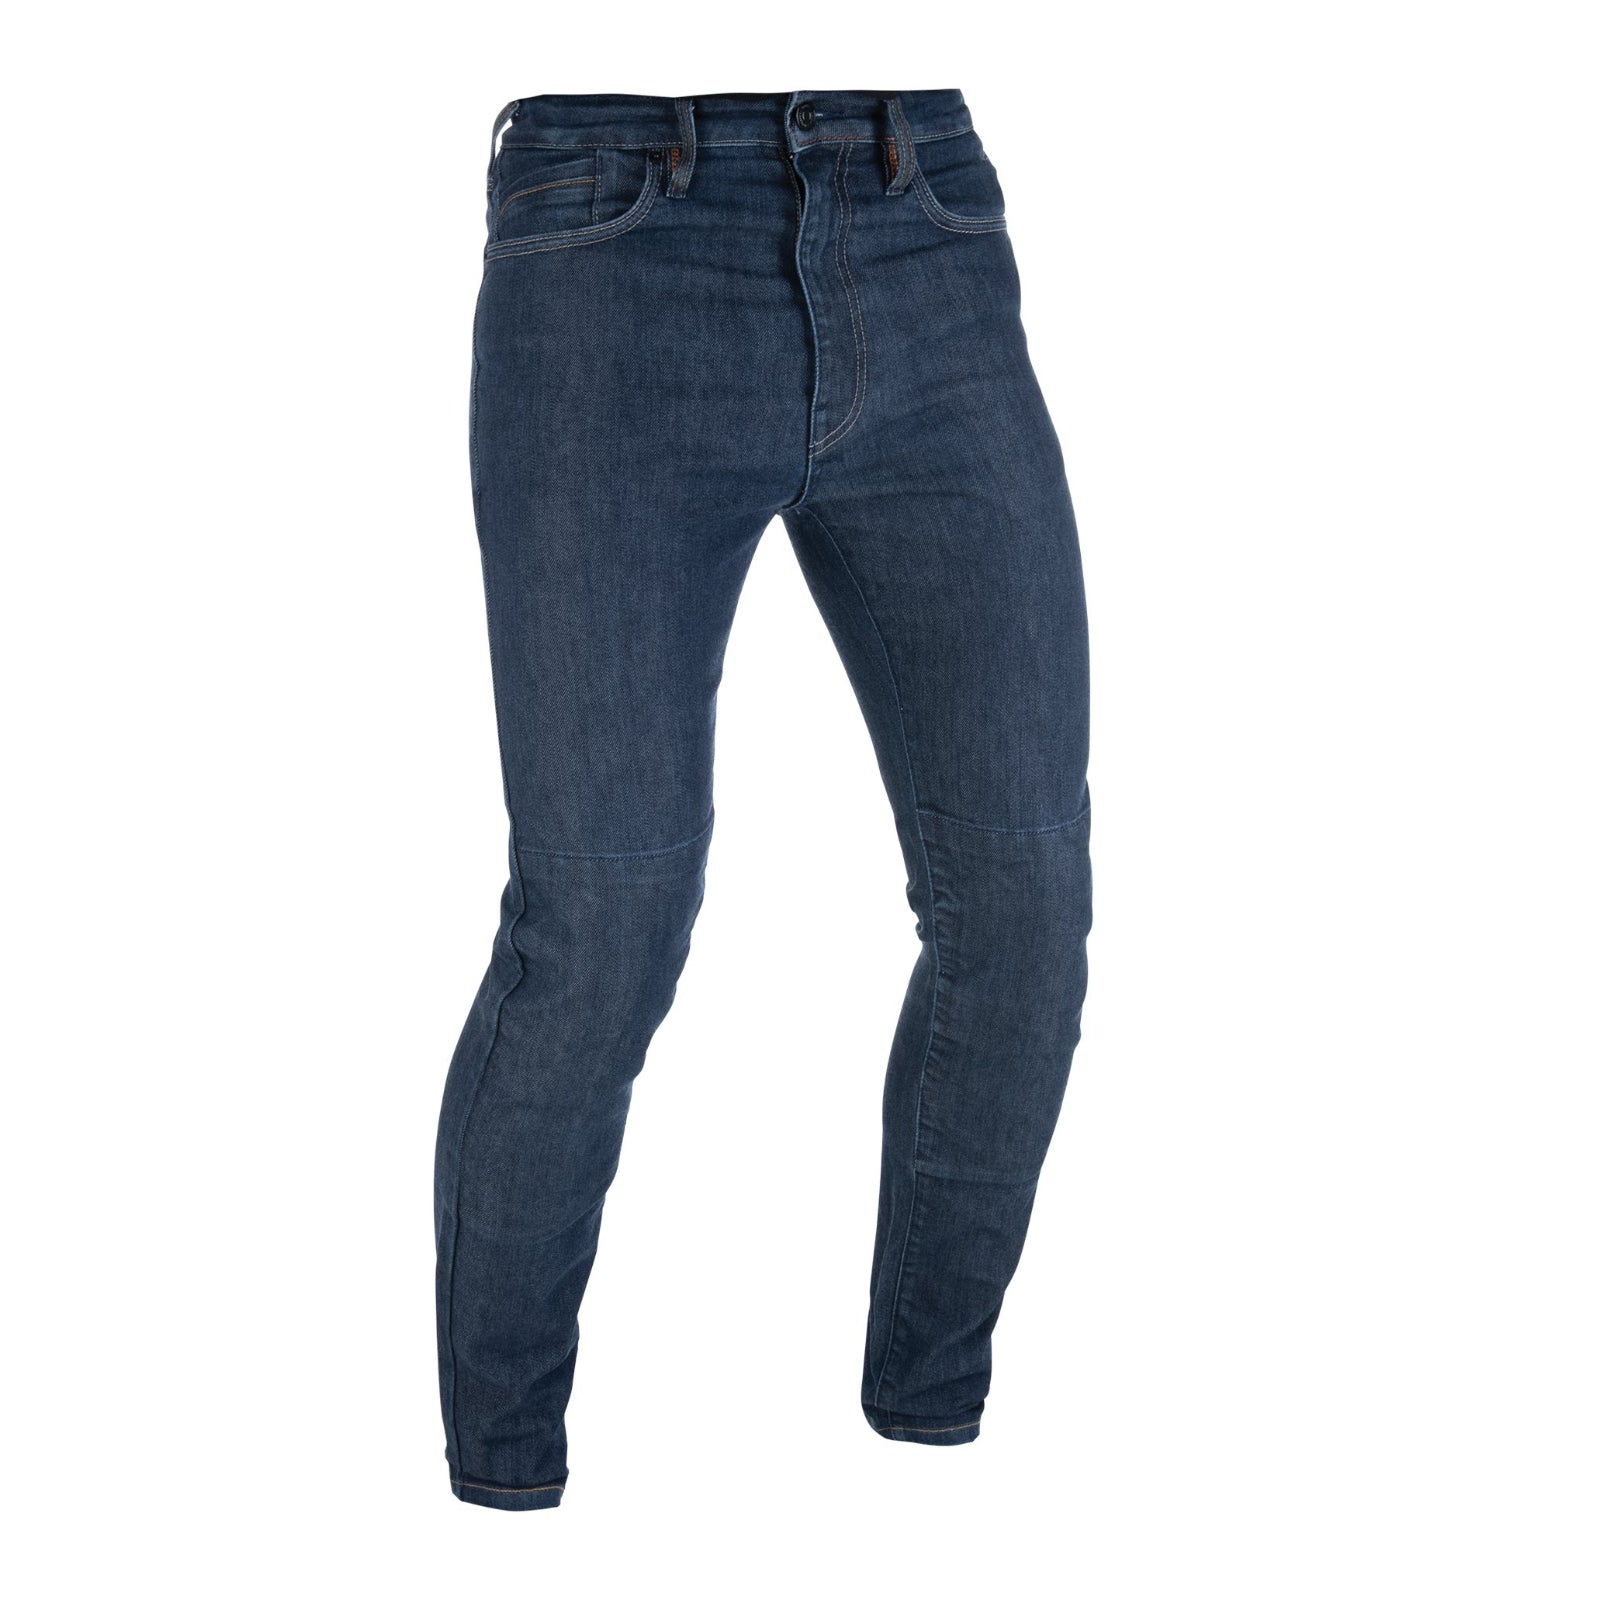 New OXFORD AA Jeans Slim MS - Indigo 34/30 #OXDM2291023430